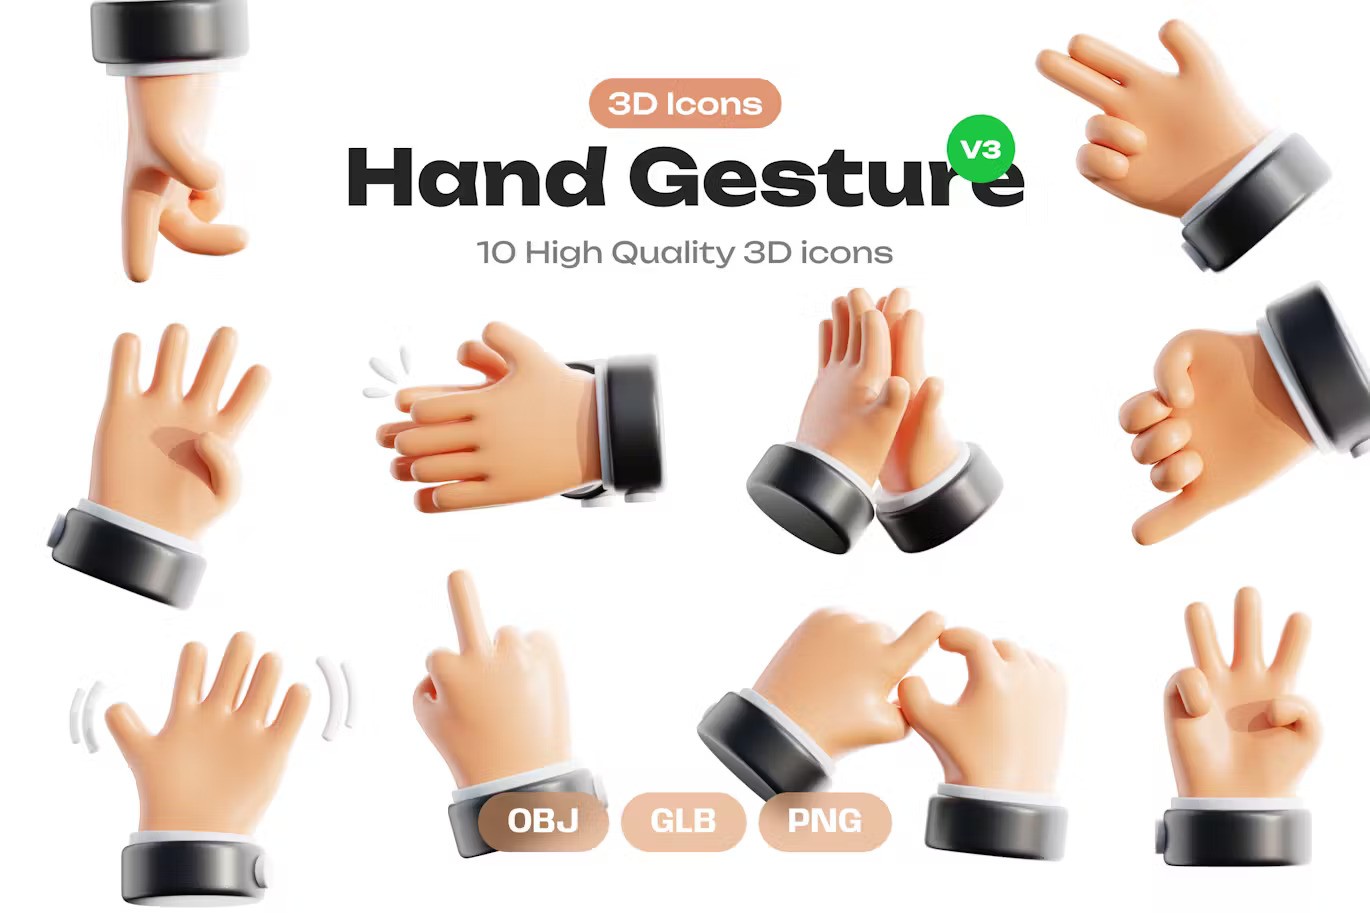 Hand Gesture 3D Icons-4.jpg